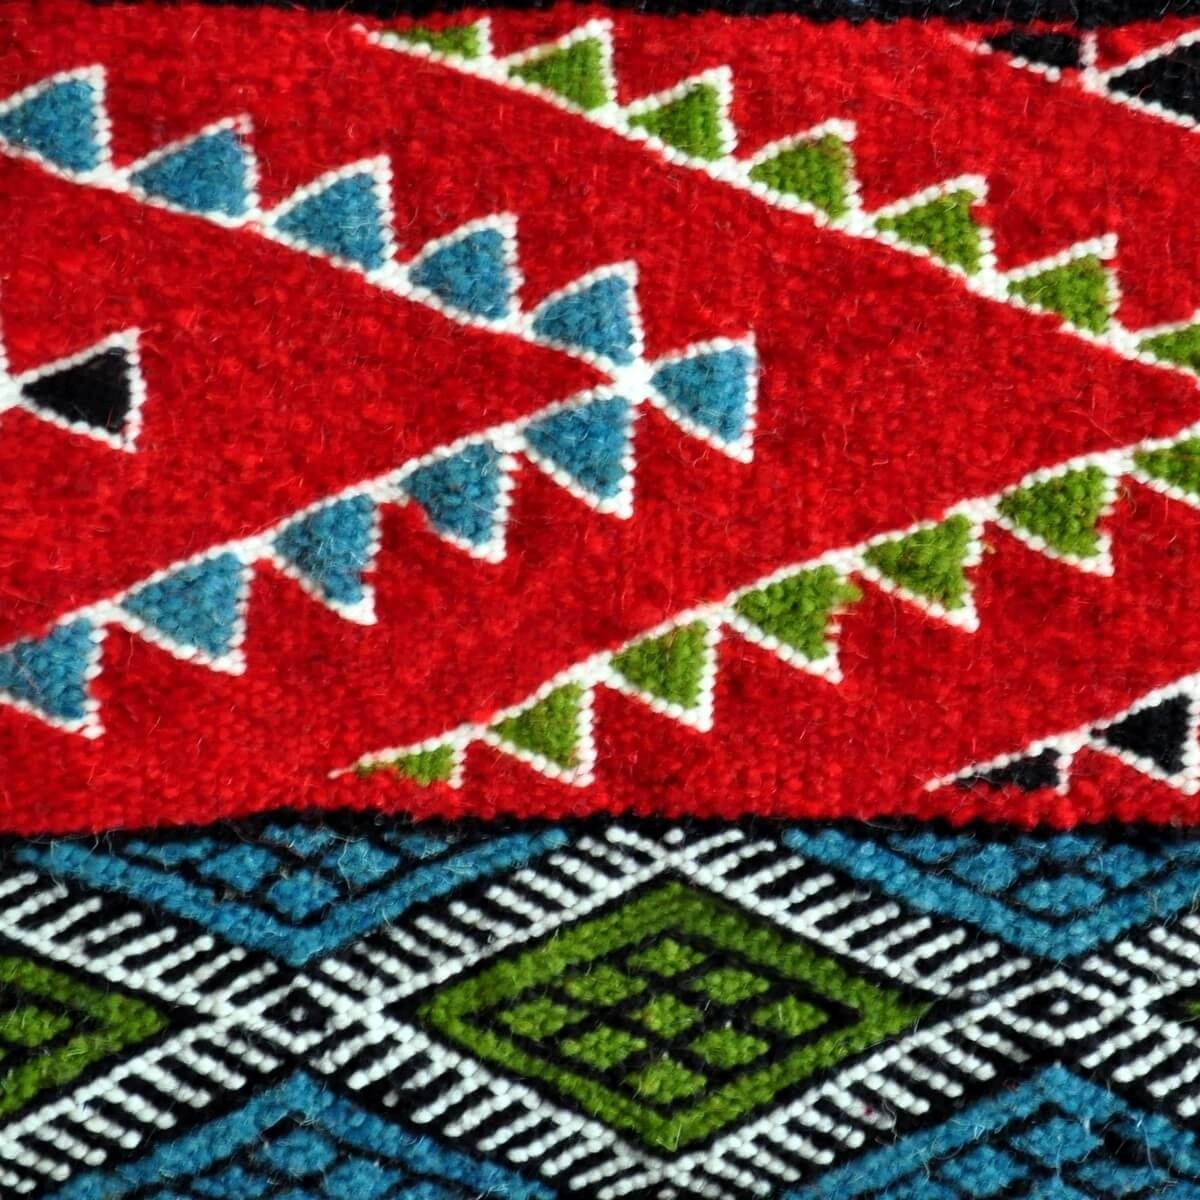 Berber tapijt Tapijt Kilim lang Huelva 60x190 Veelkleurig (Handgeweven, Wol, Tunesië) Tunesisch kilimdeken, Marokkaanse stijl. R